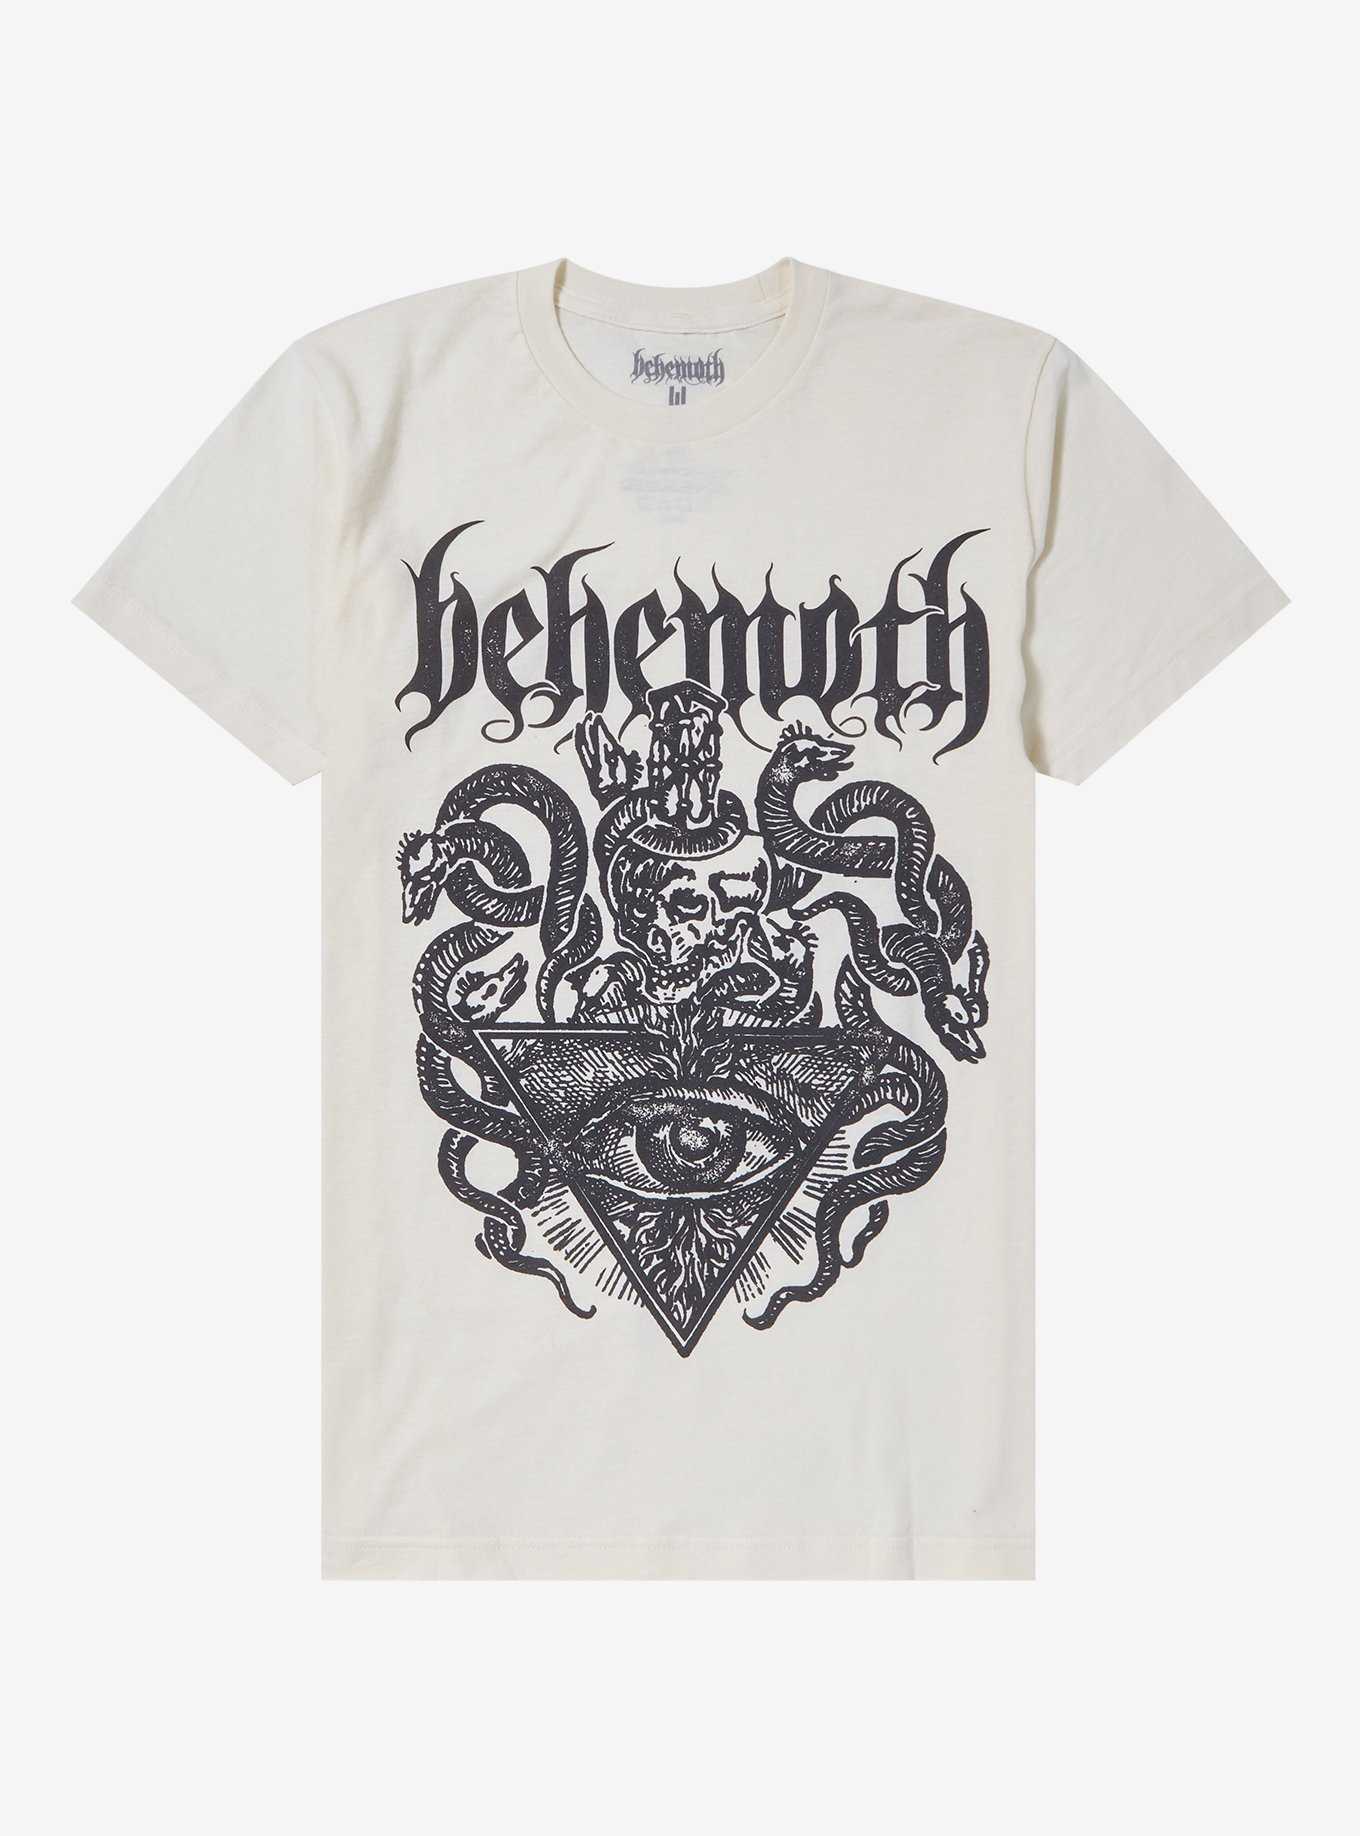 Behemoth Serpents Boyfriend Fit Girls T-Shirt, , hi-res